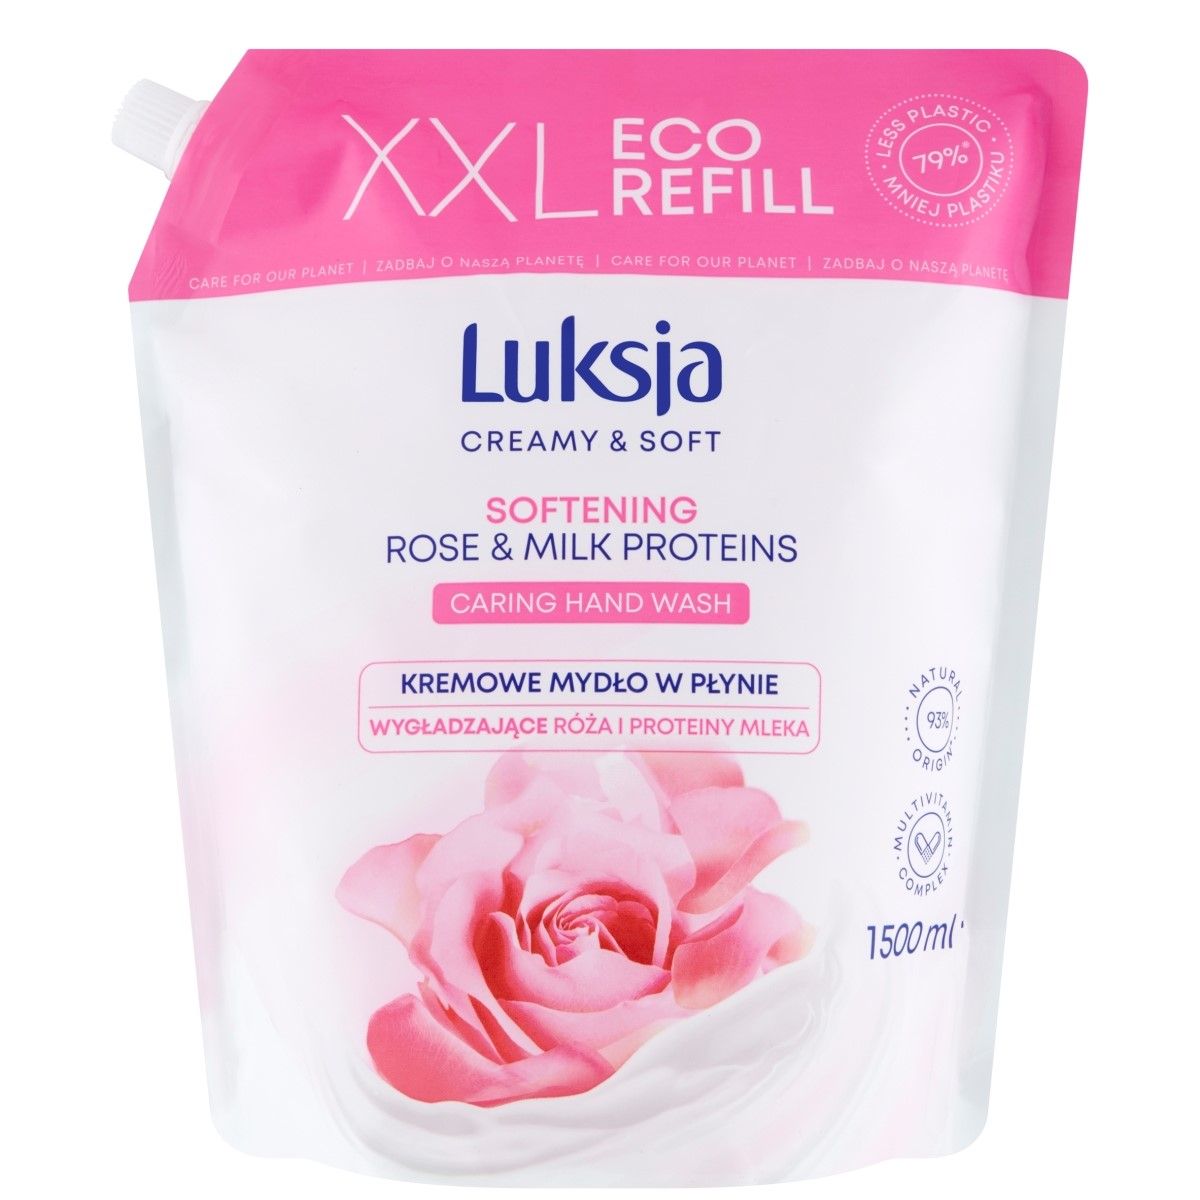 Сменный блок - жидкое мыло Luksja Rose Refill, 1500 мл